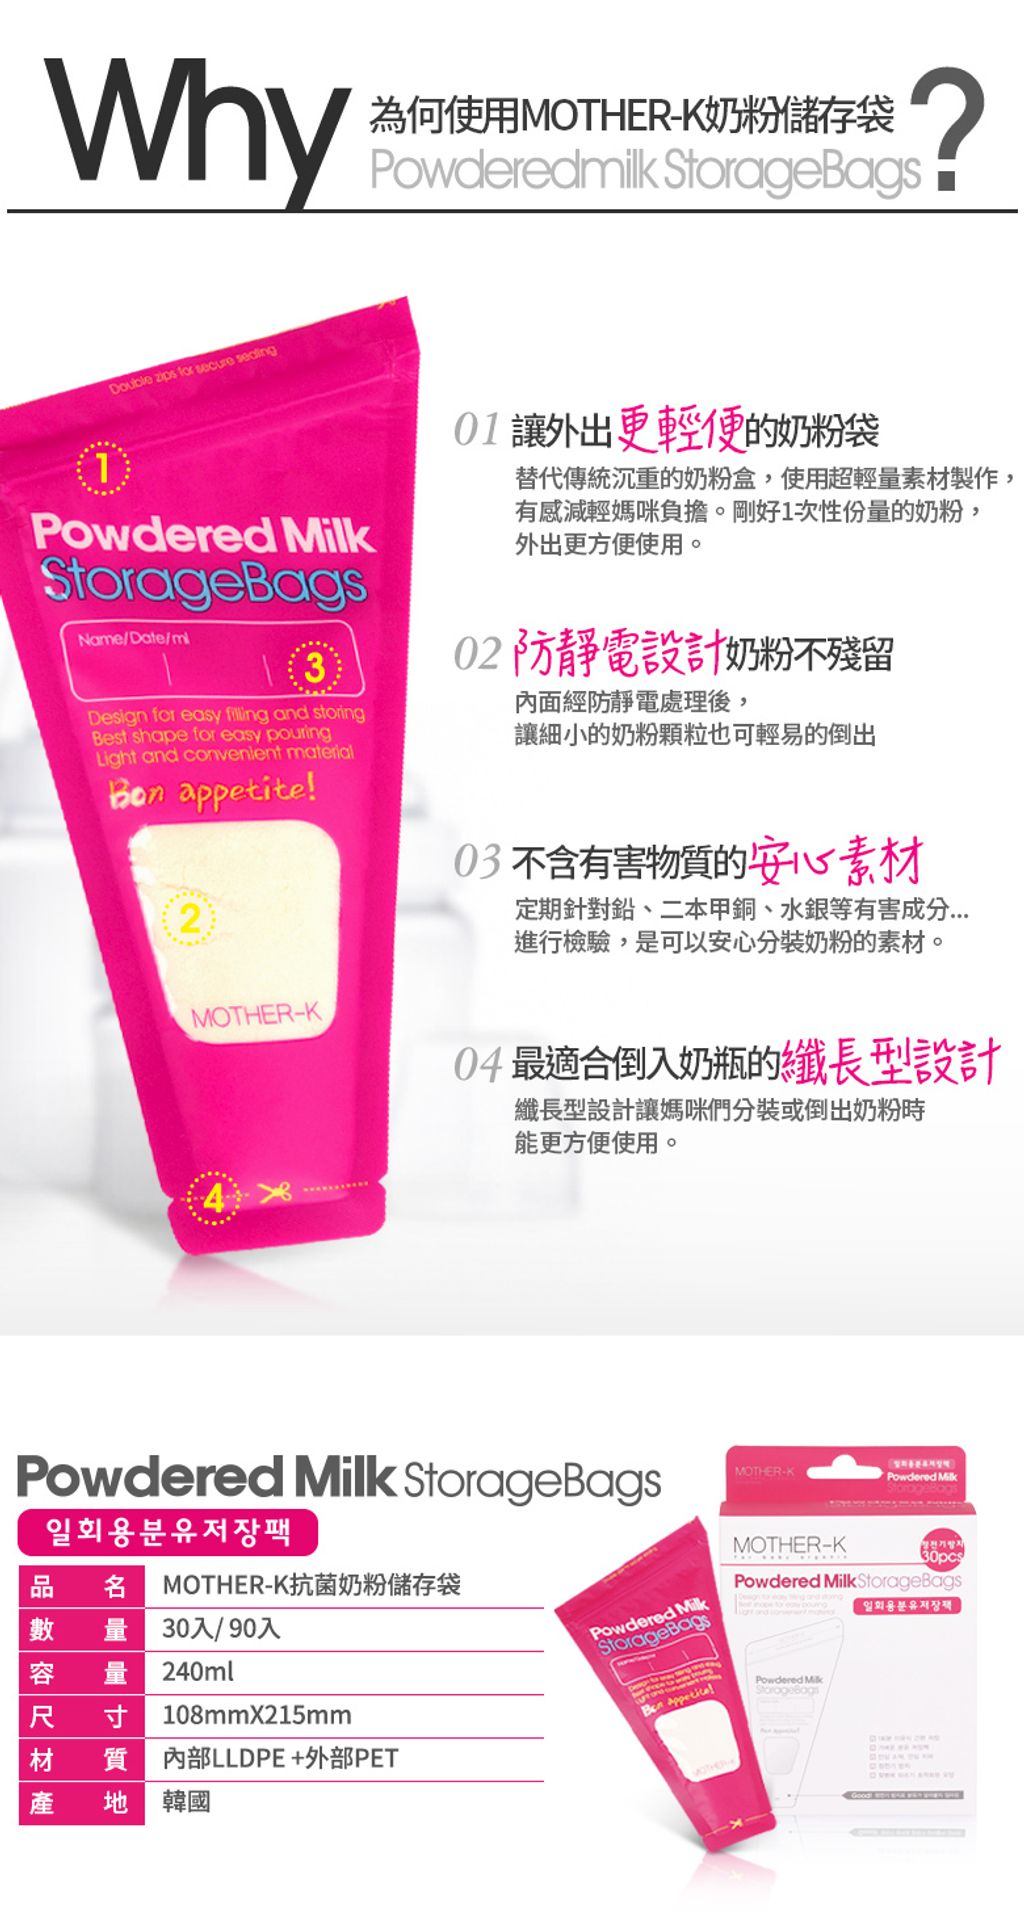 mother-k-powder-milk-storagebag-cn3.jpg